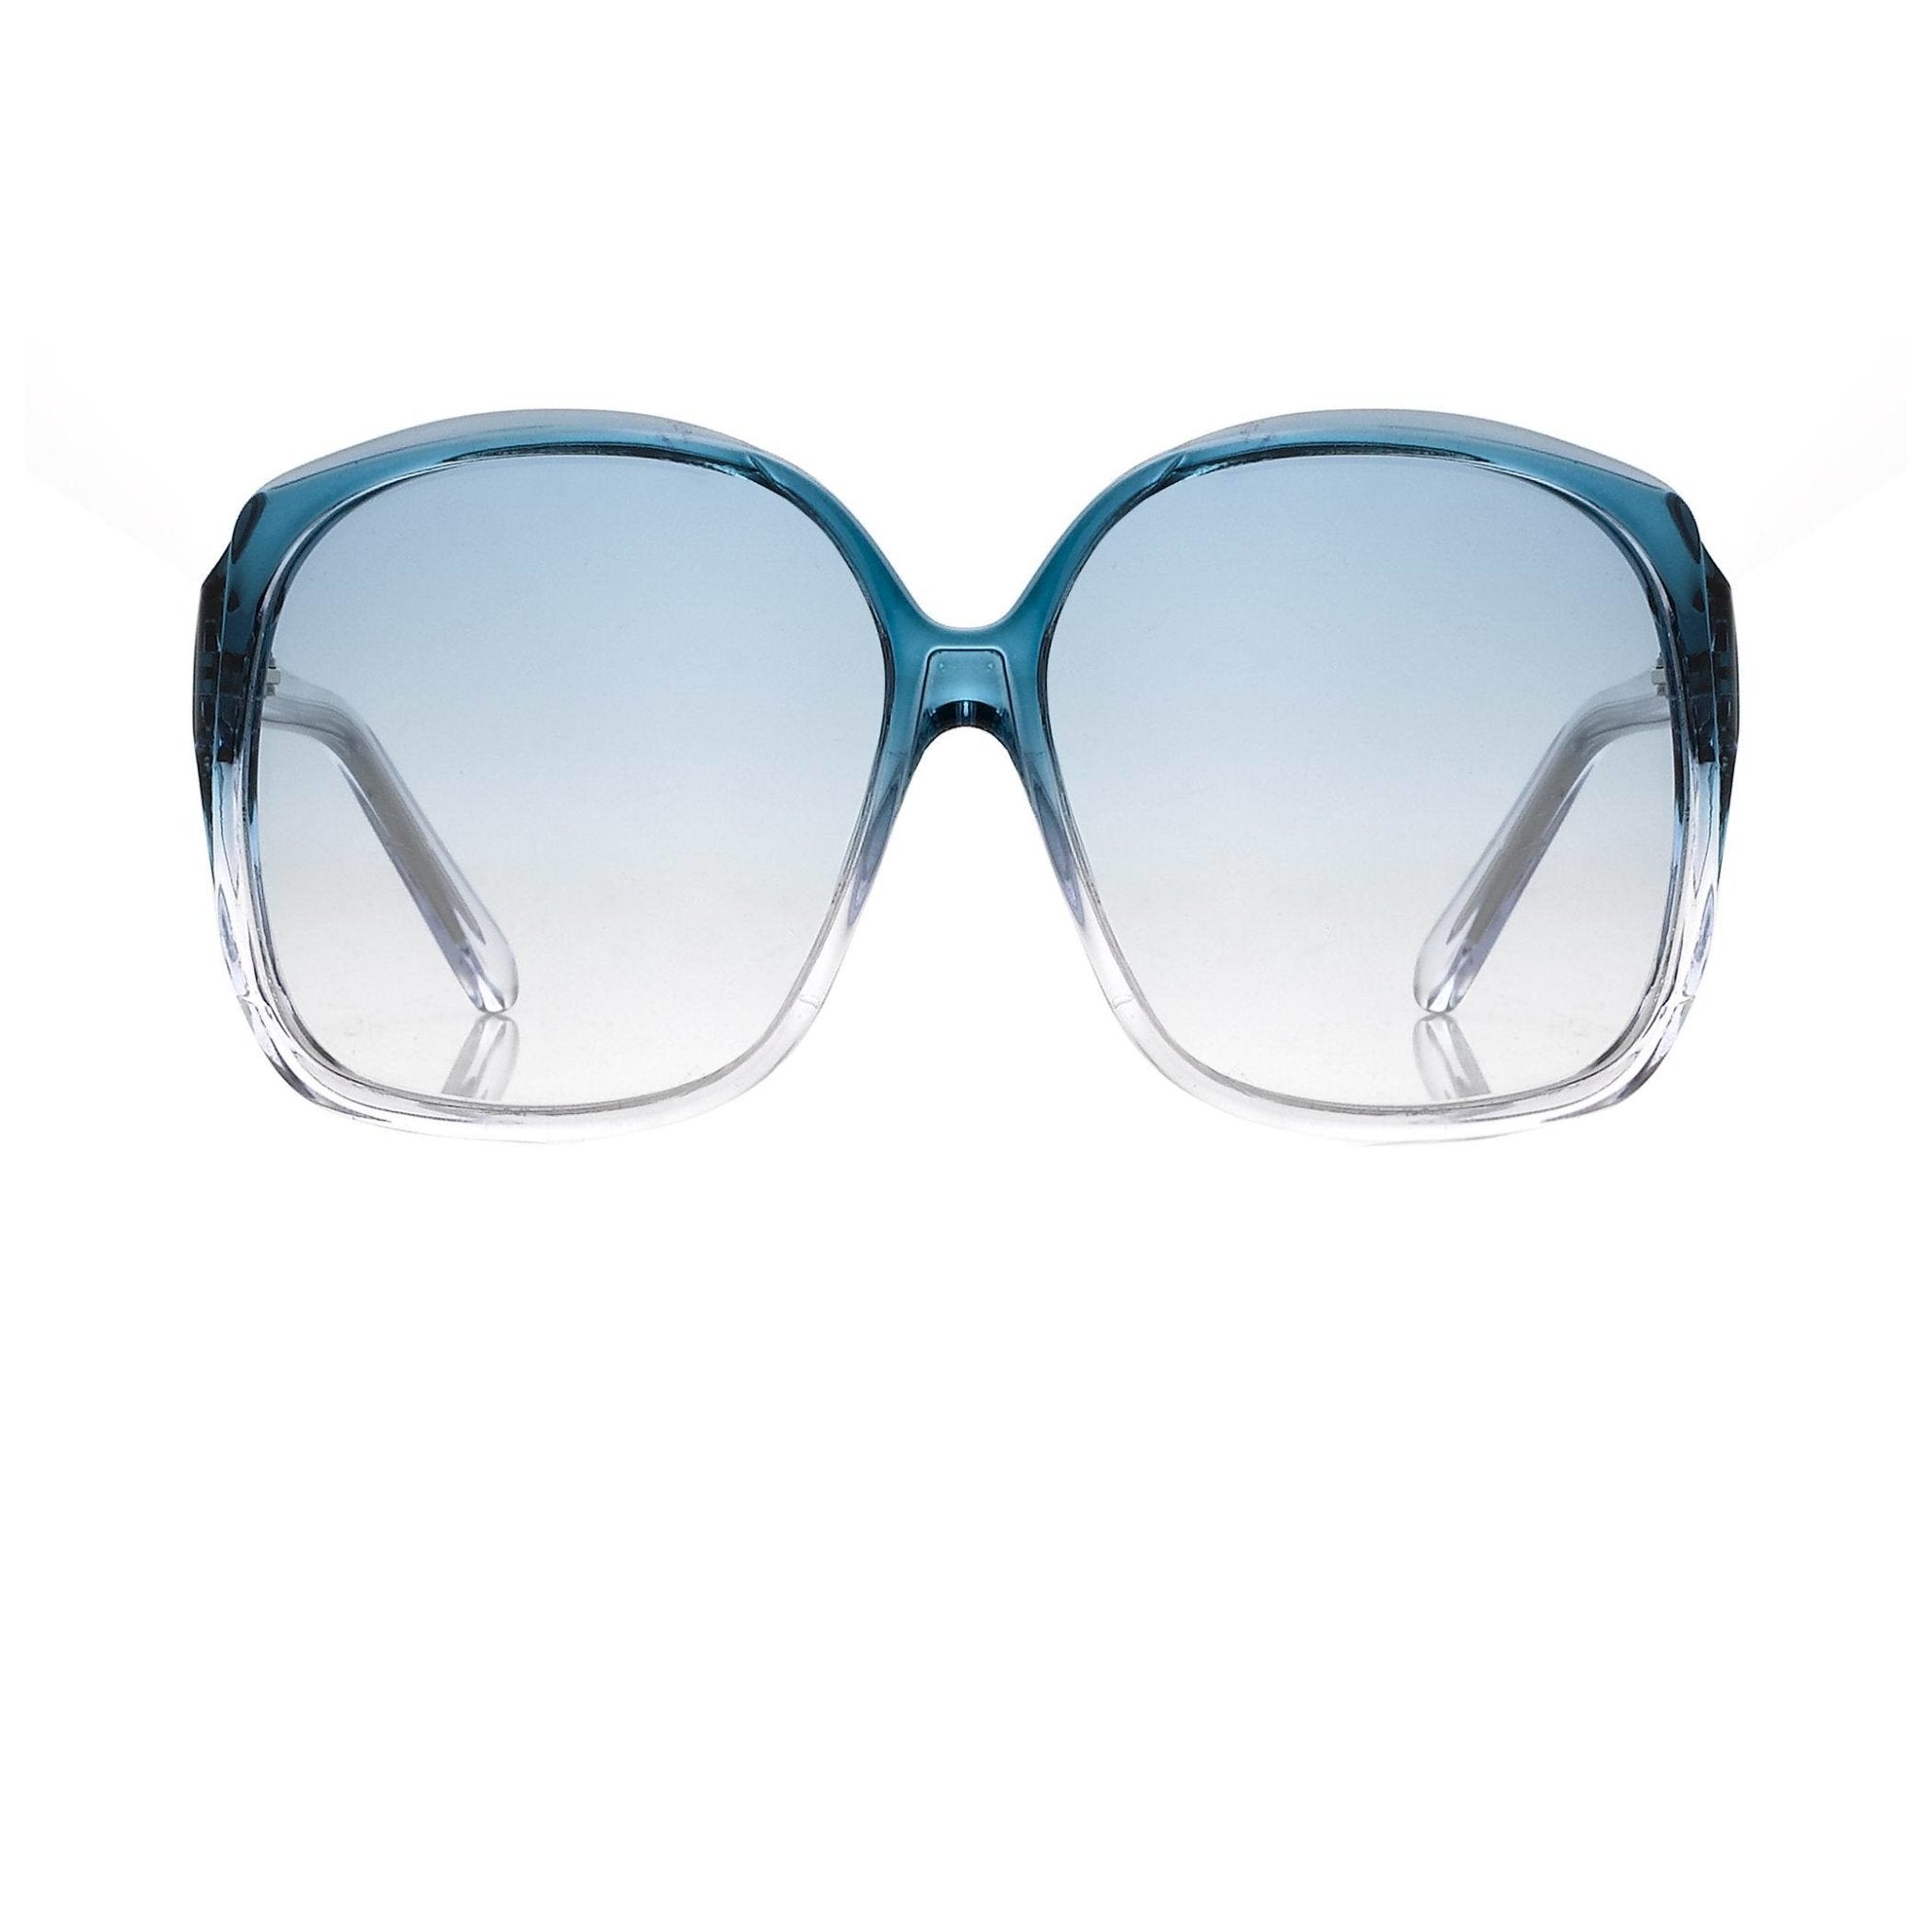 Antonio Berardi Women Sunglasses Oversized Frame Blue/Clear and Blue Graduated Lenses - 9AB2C3PETROL - Watches & Crystals